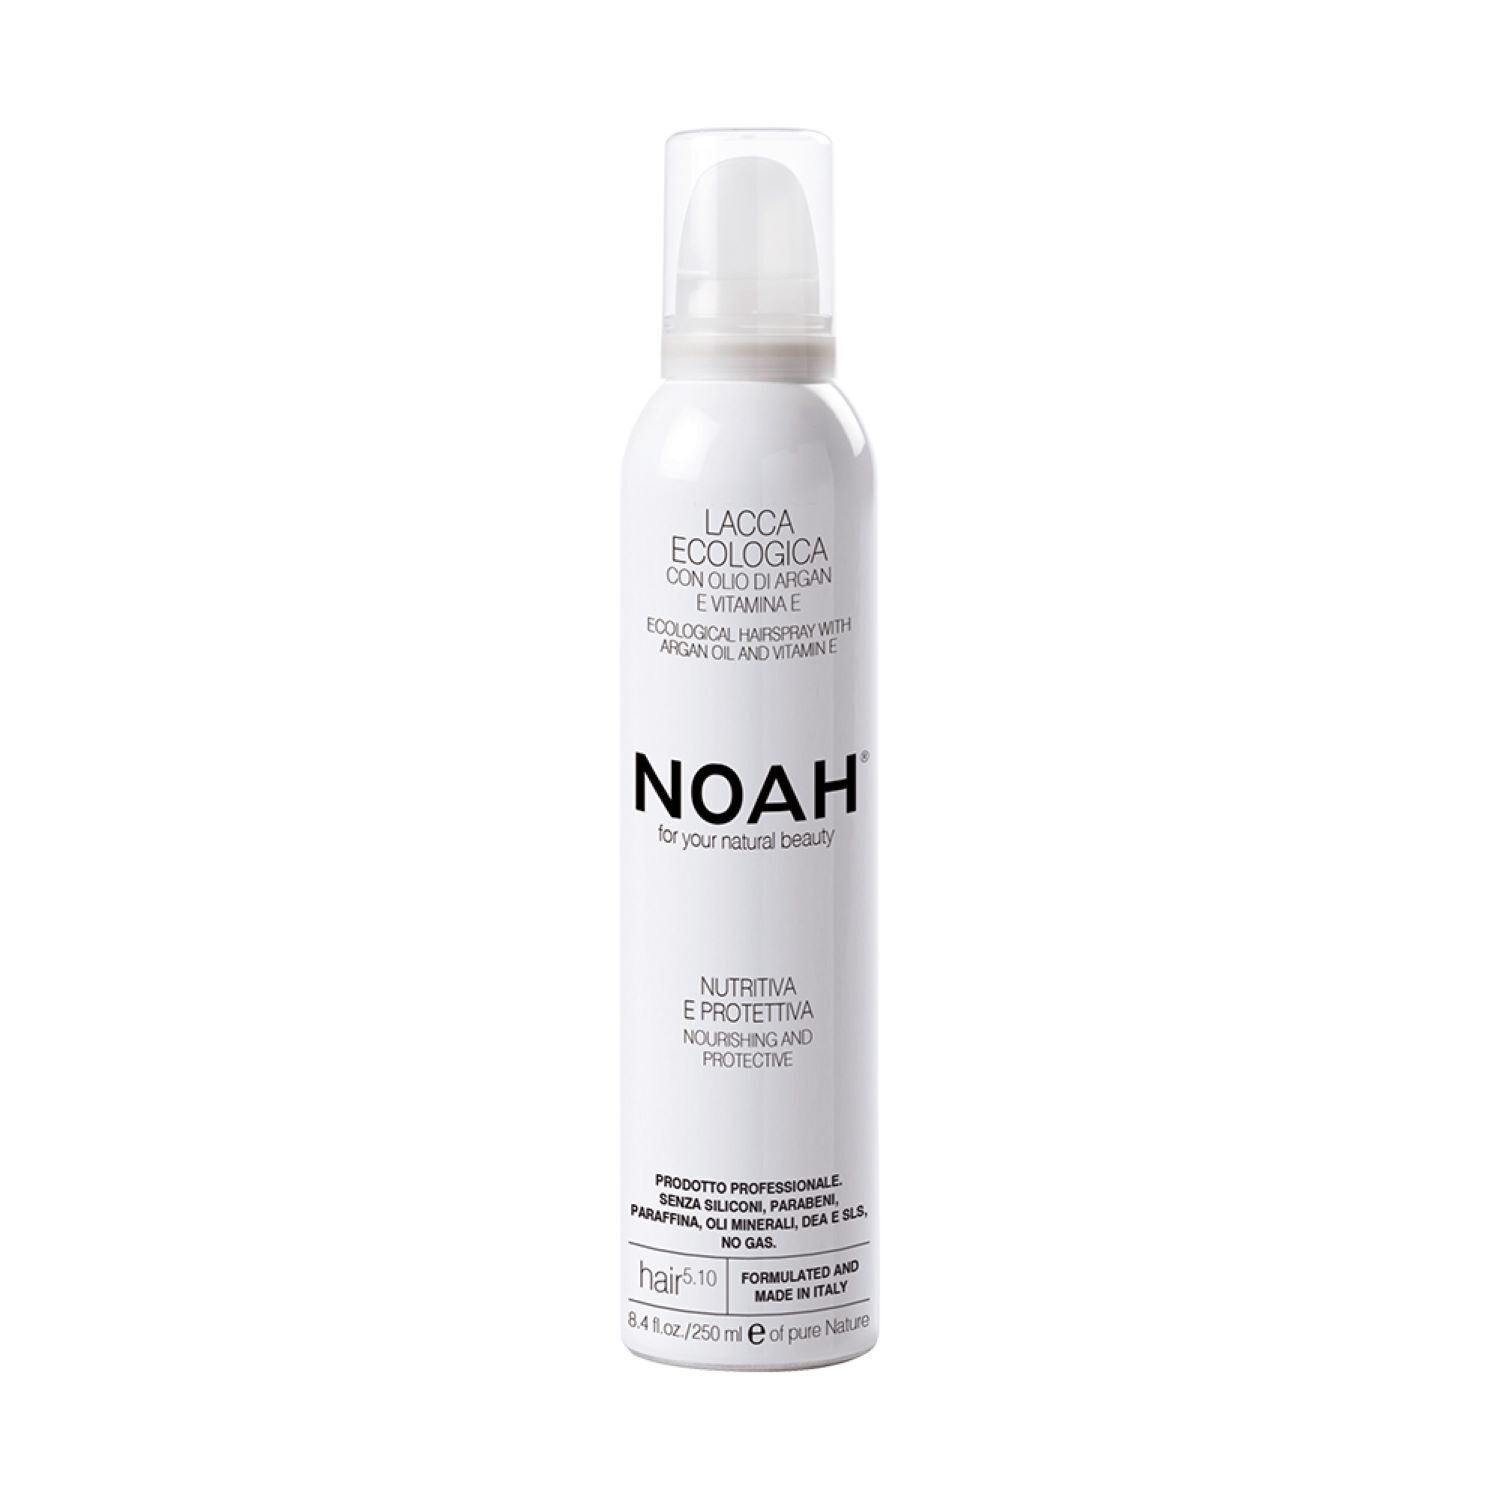 Экологический лак для волос с витамином е Noah For Your Natural Beauty, 250 мл цена и фото